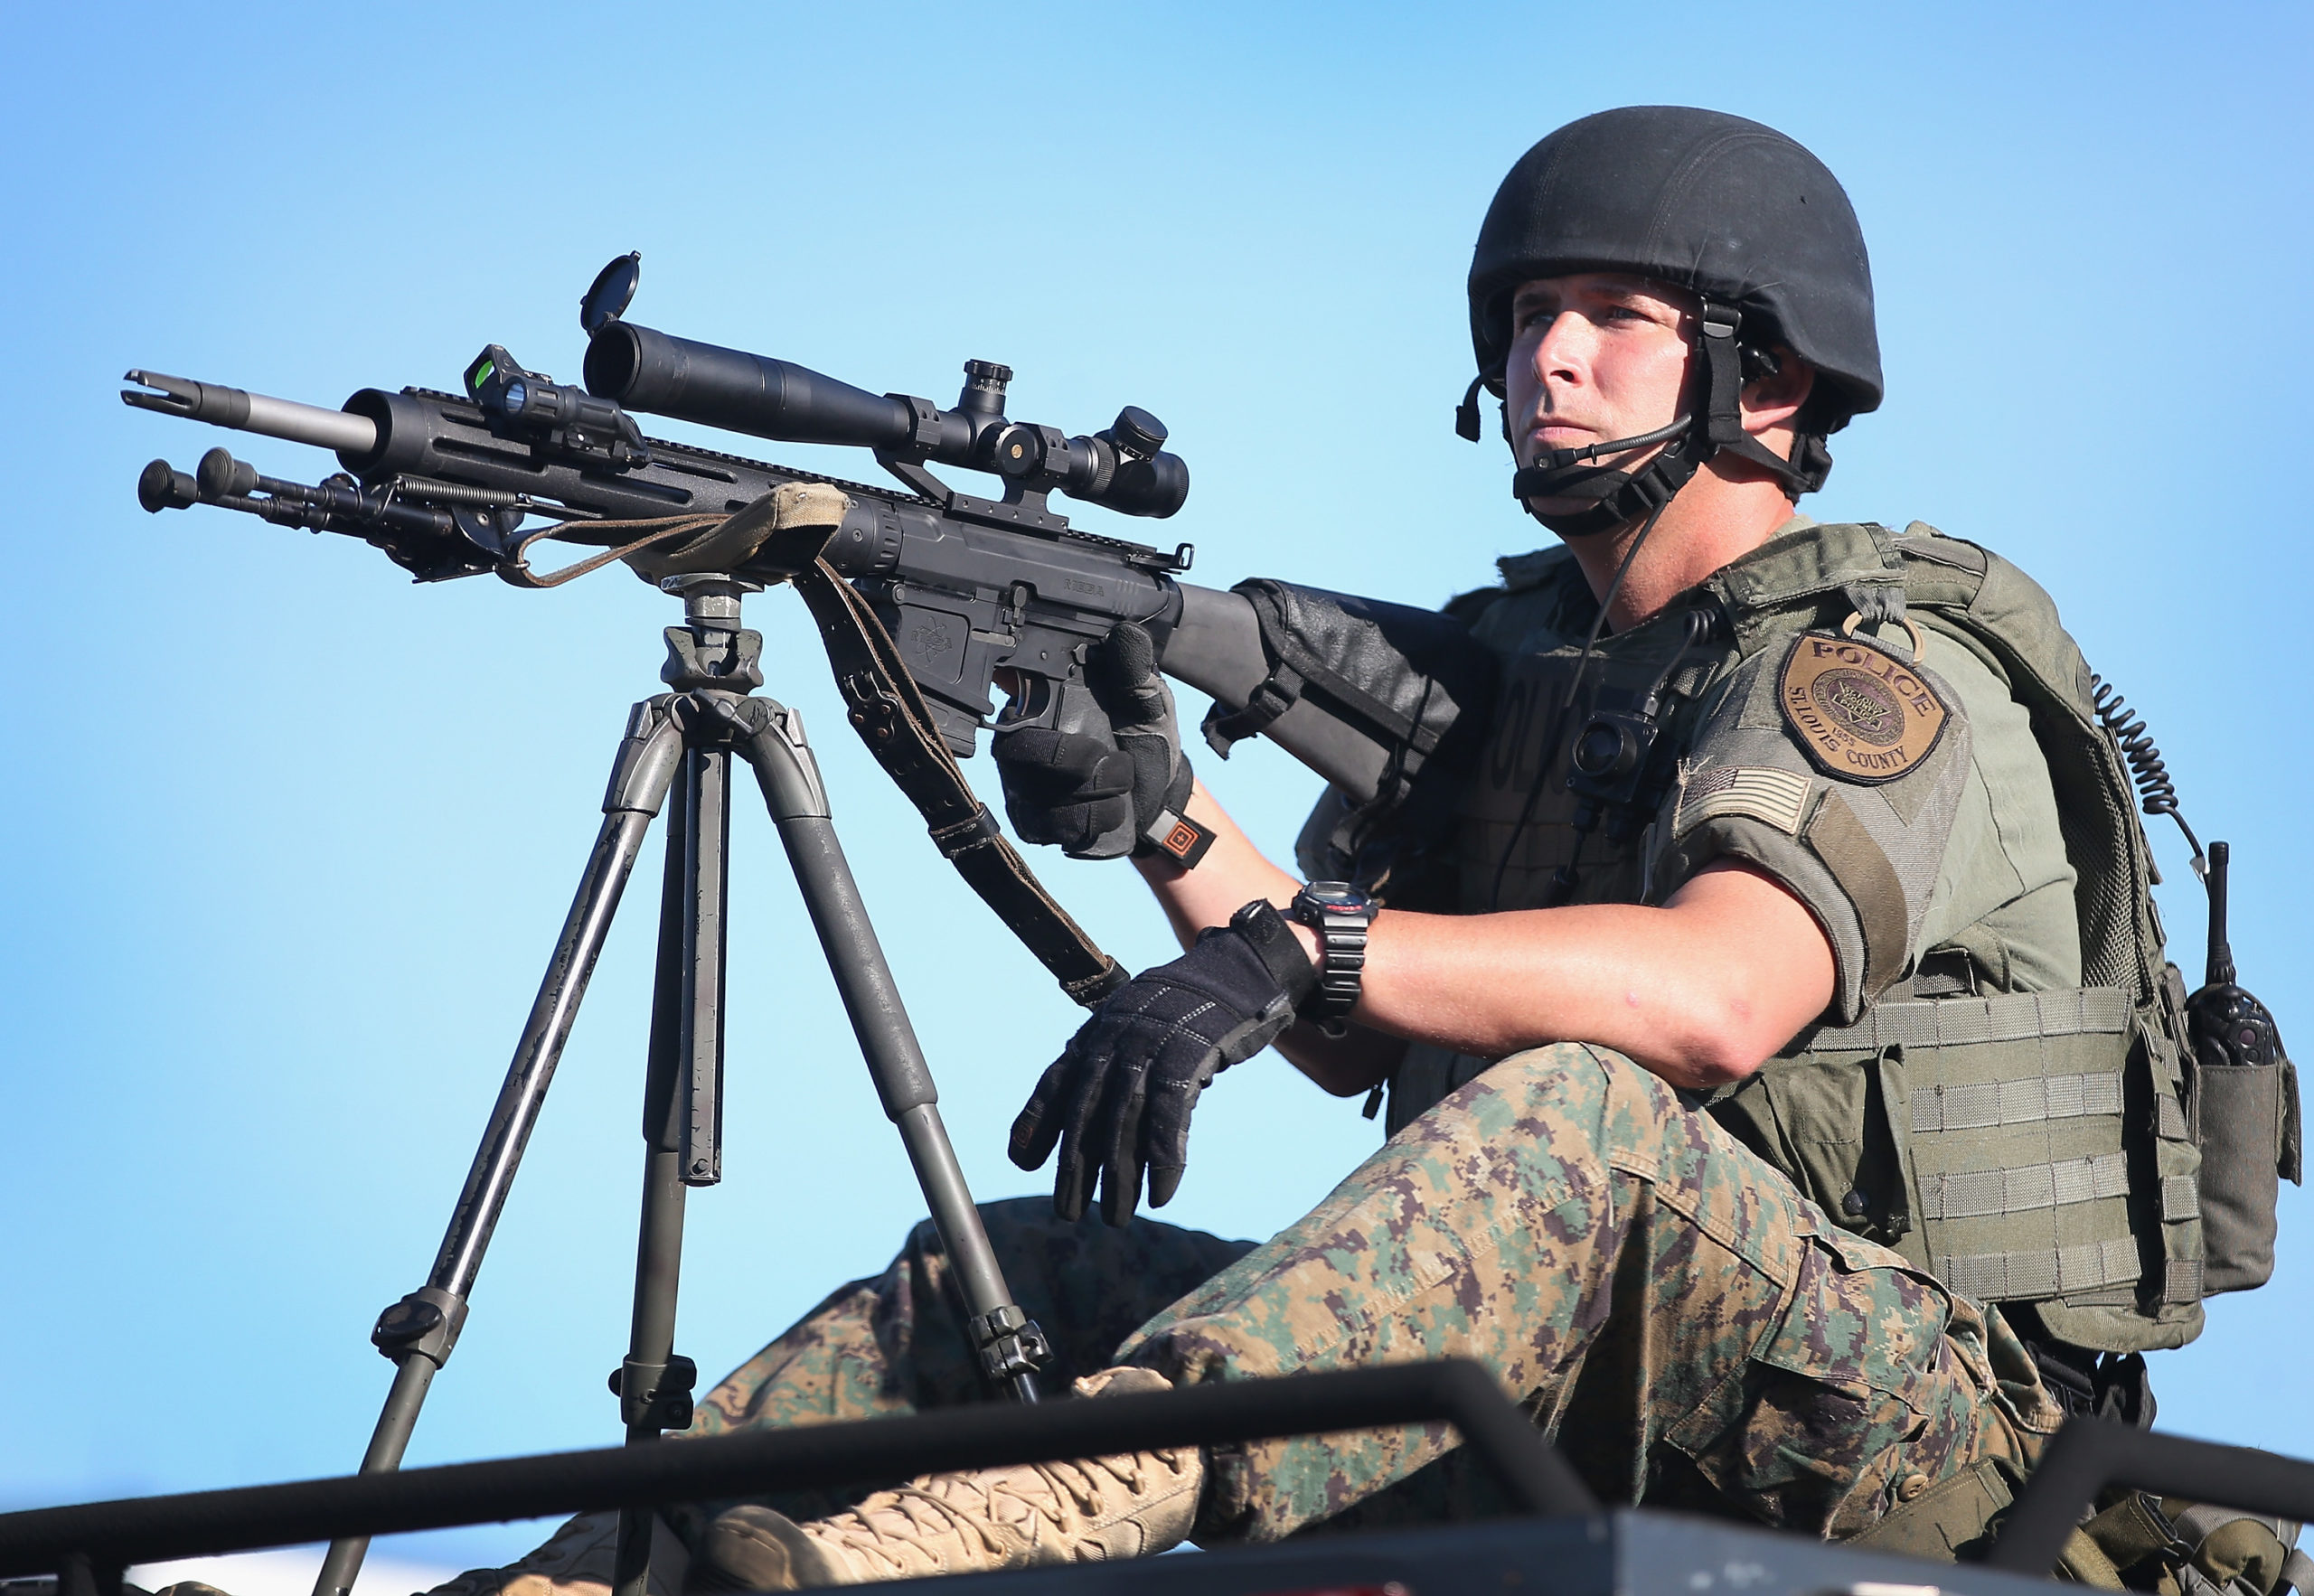 Why The Ferguson Police Force Looks Like A Military Unit